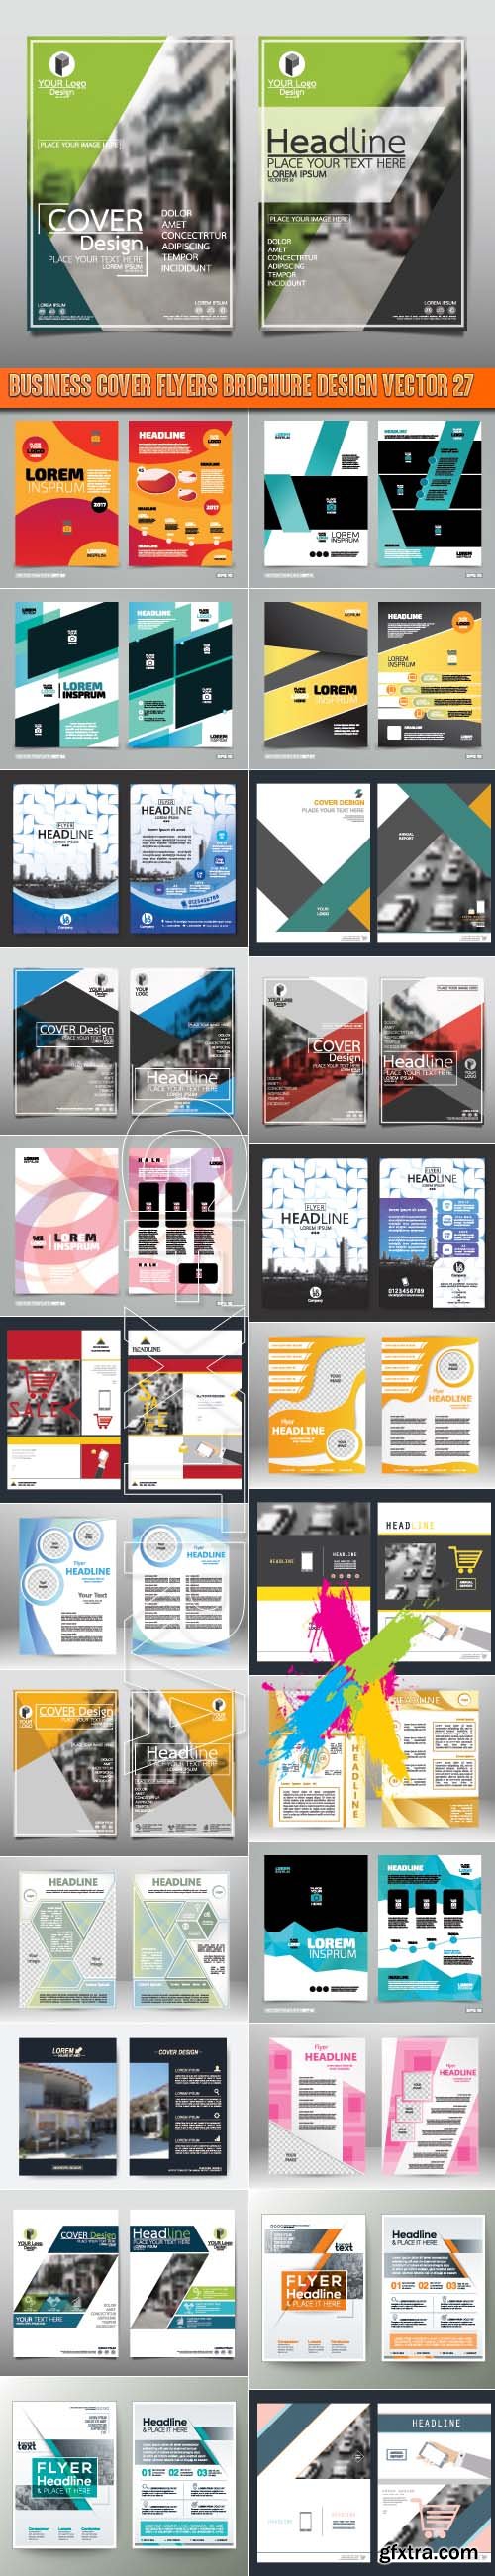 Business cover flyers brochure design vector 27